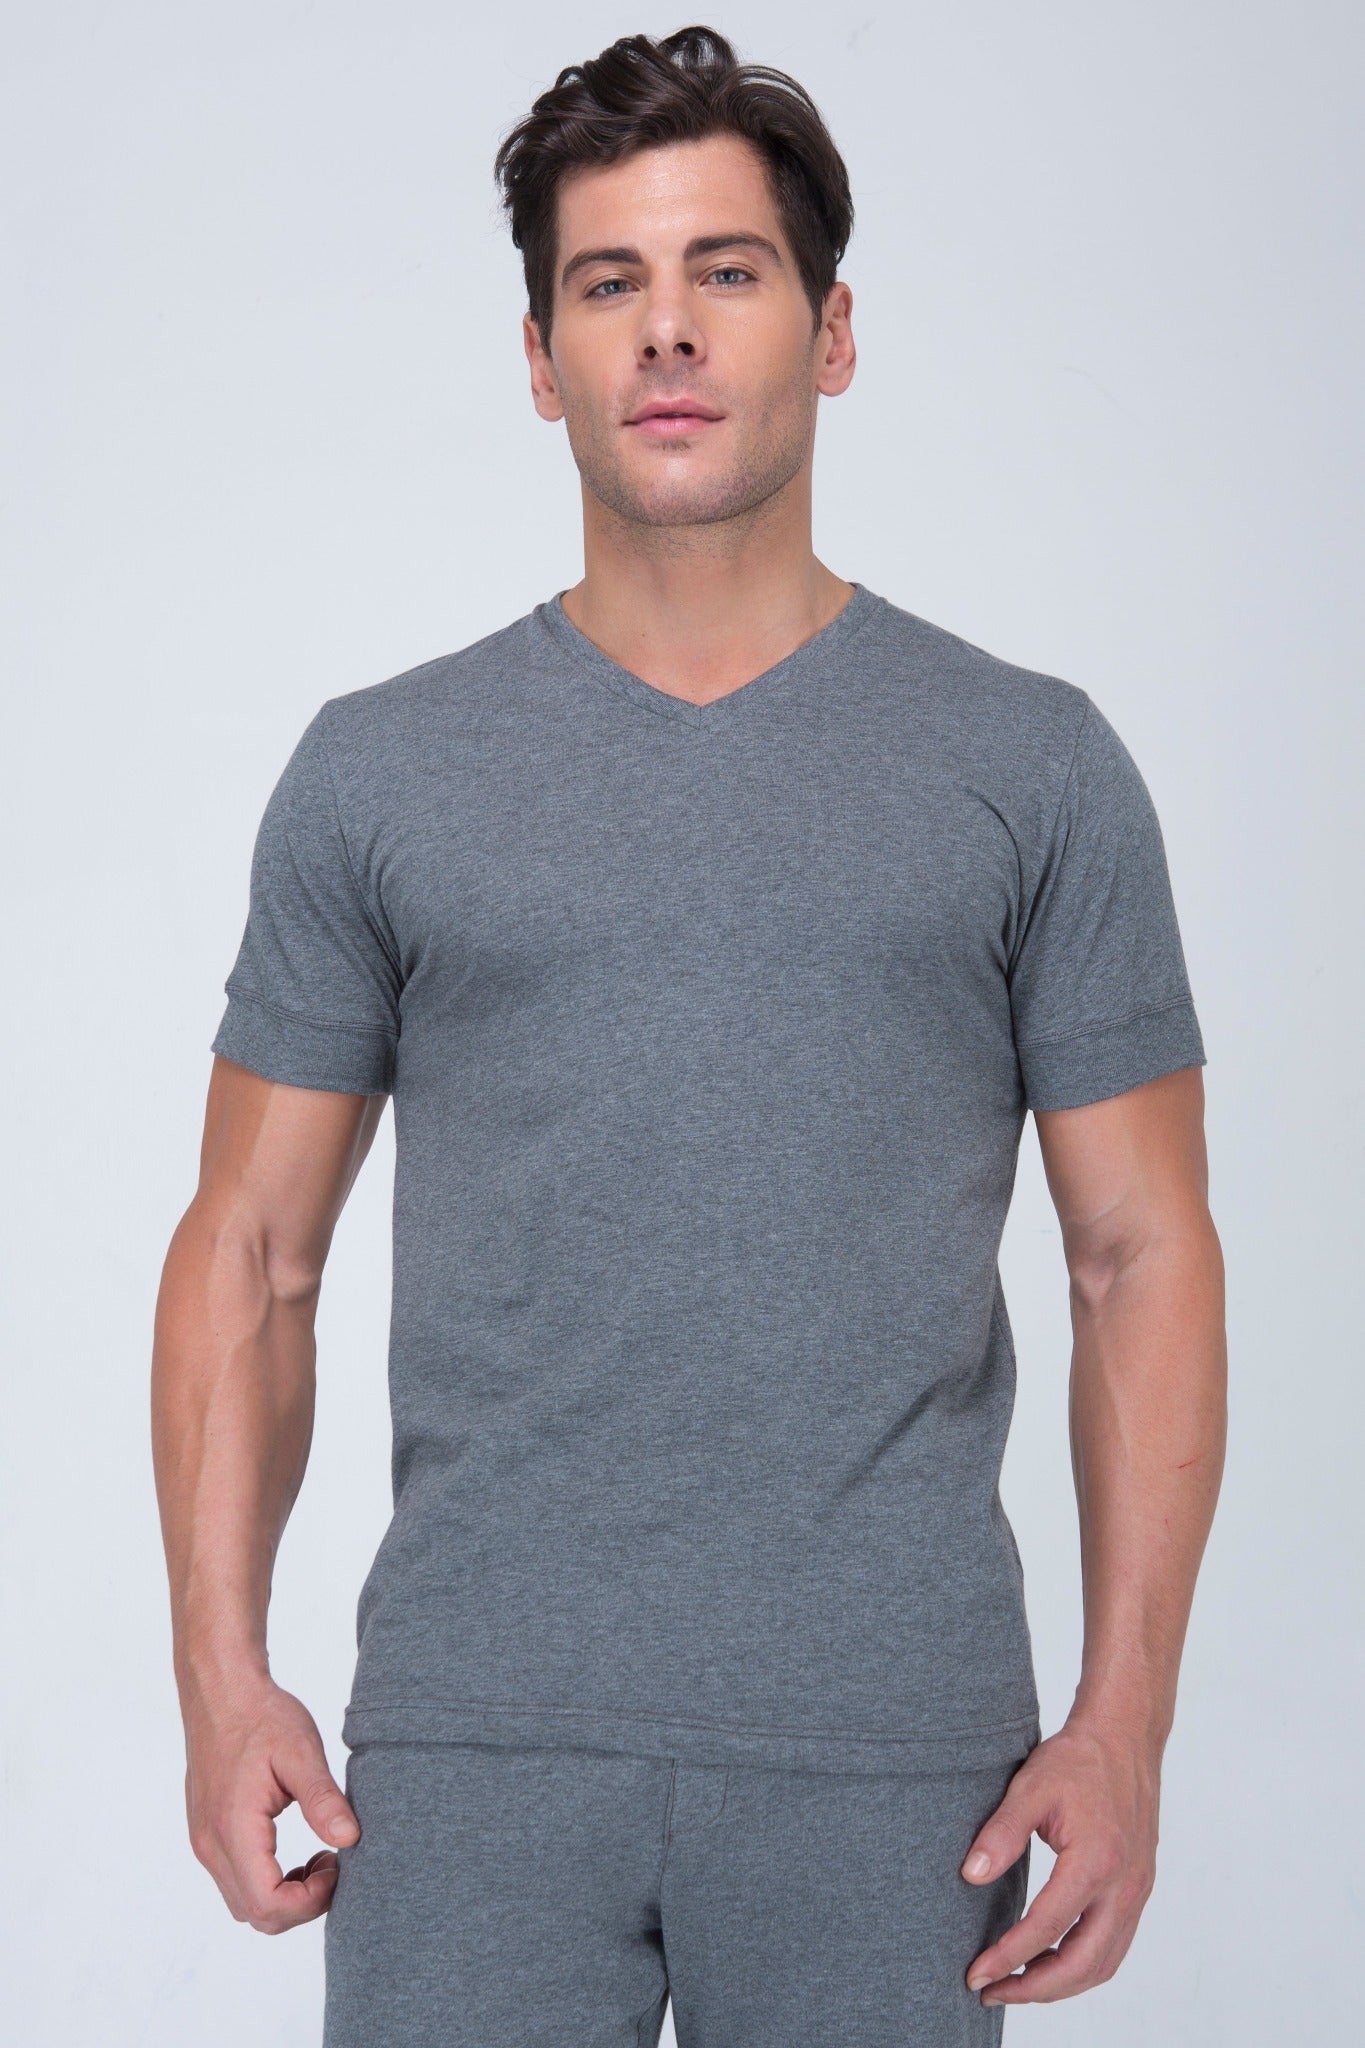 Men's Athletic V-Neck Shirt